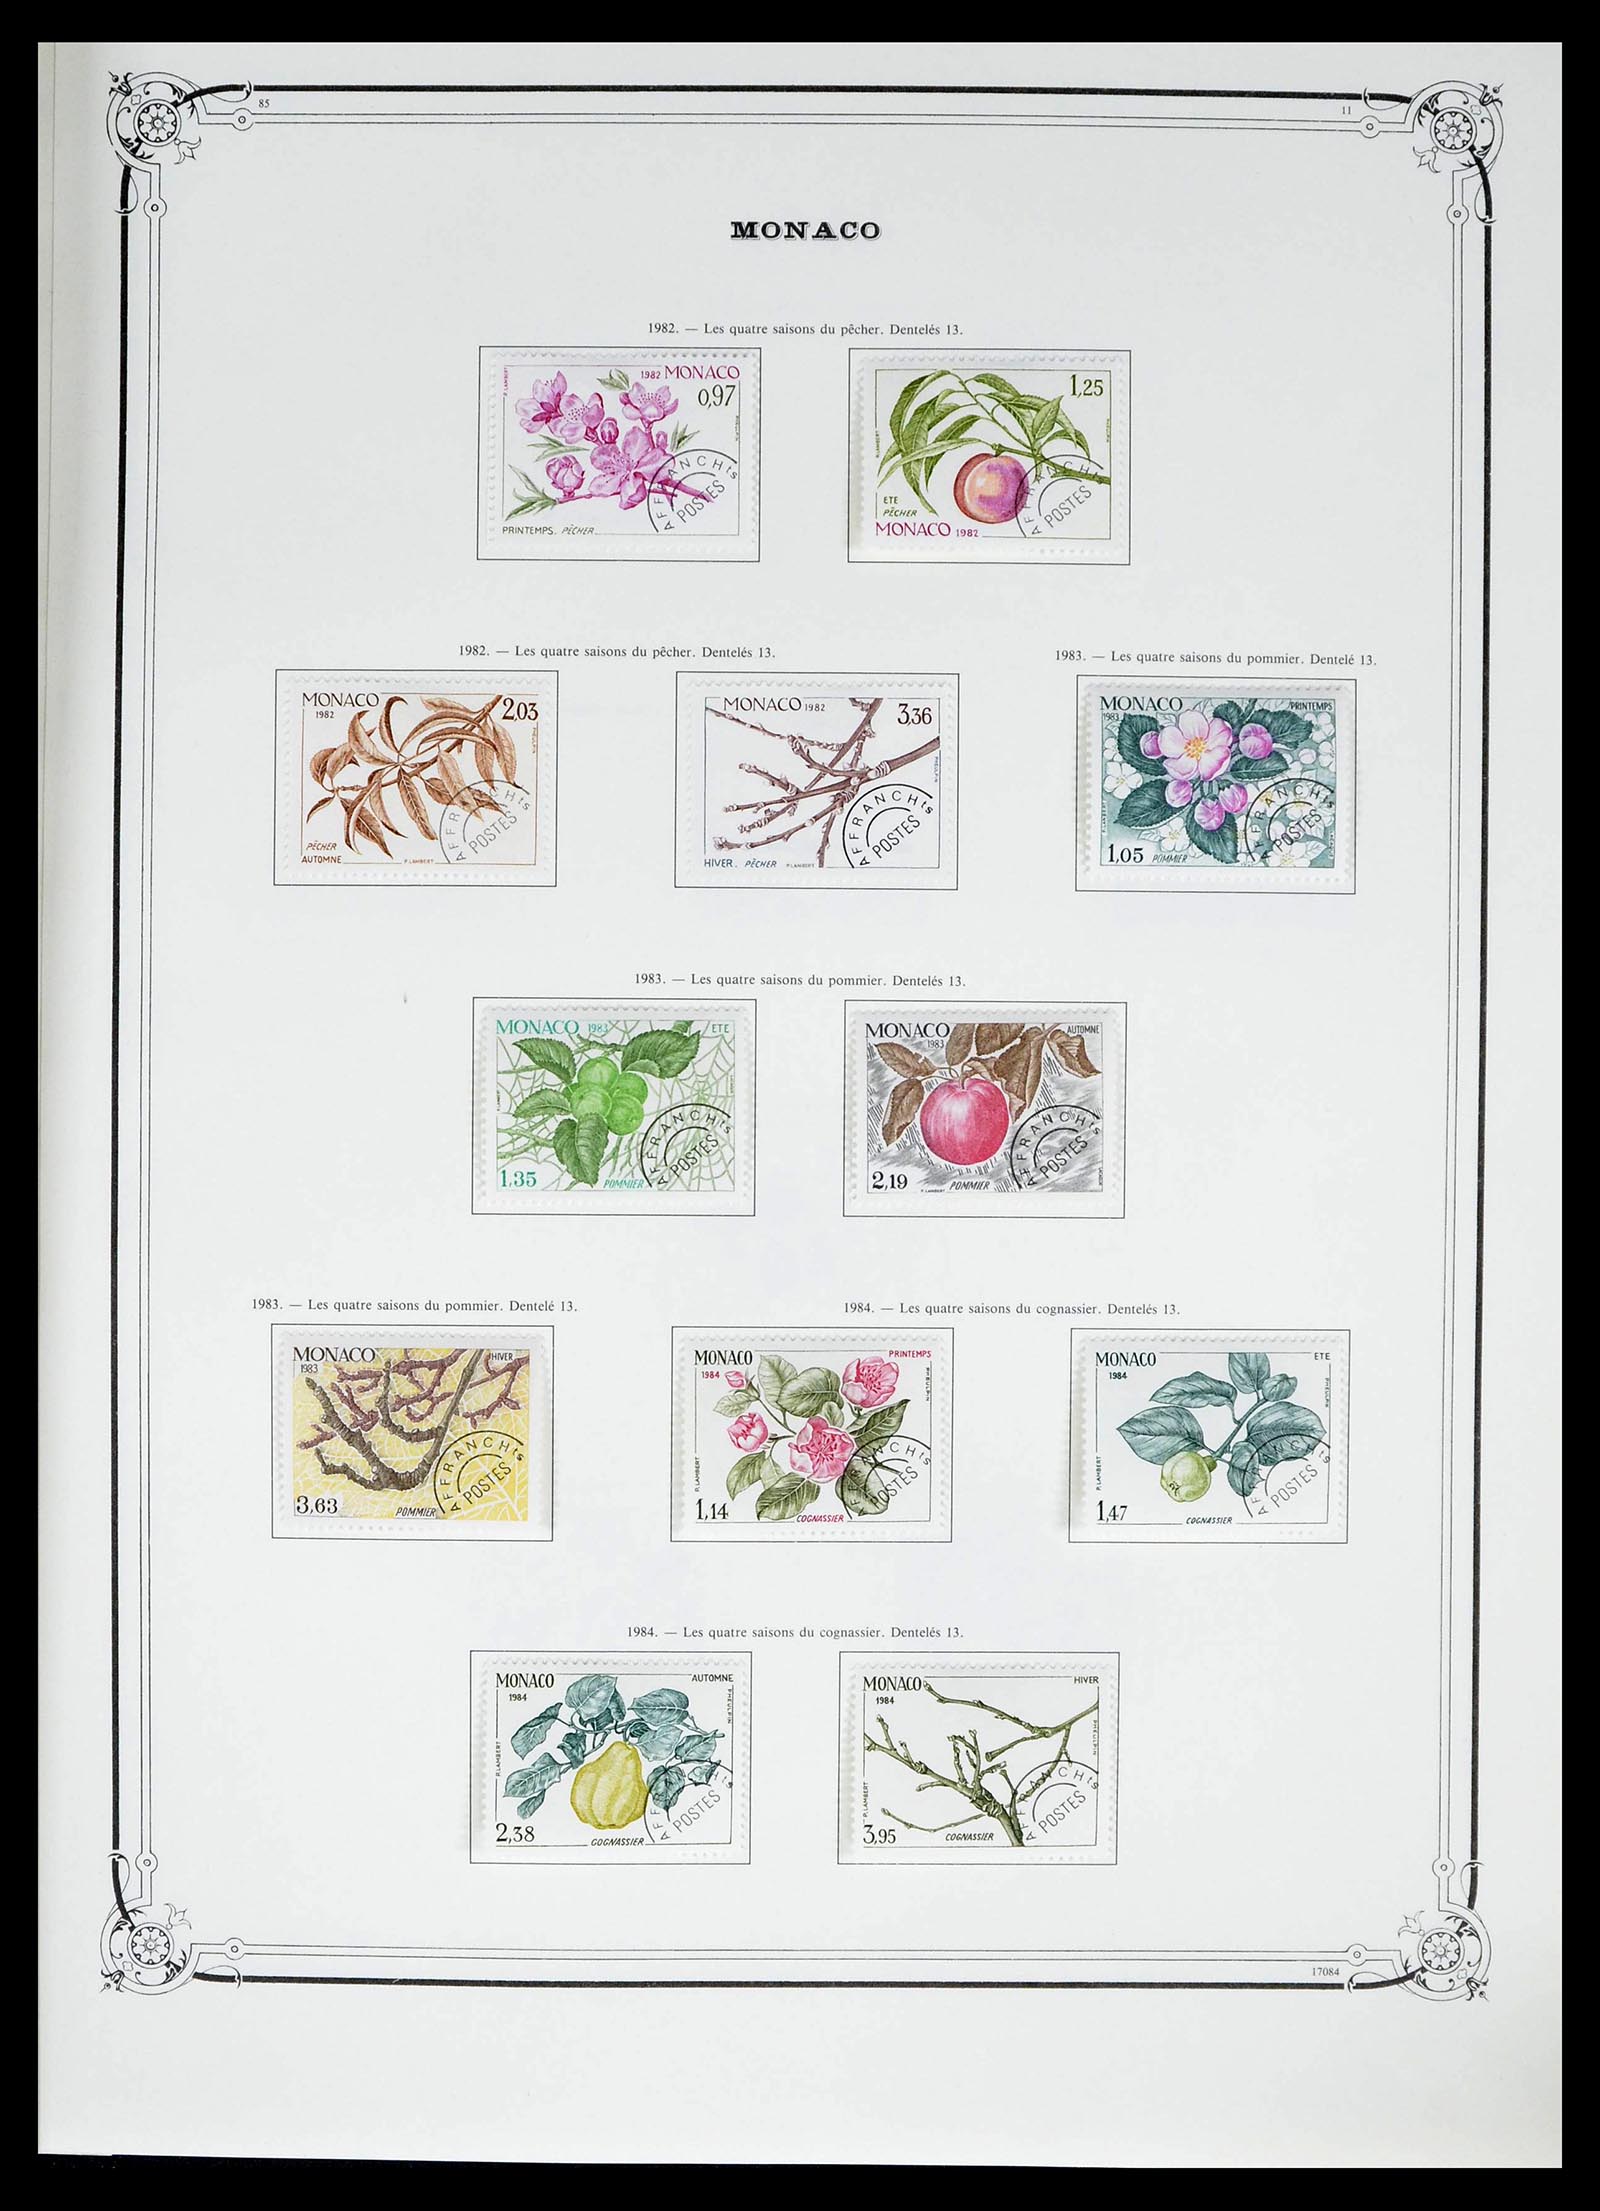 39133 0078 - Stamp collection 39133 Monaco 1885-1996.